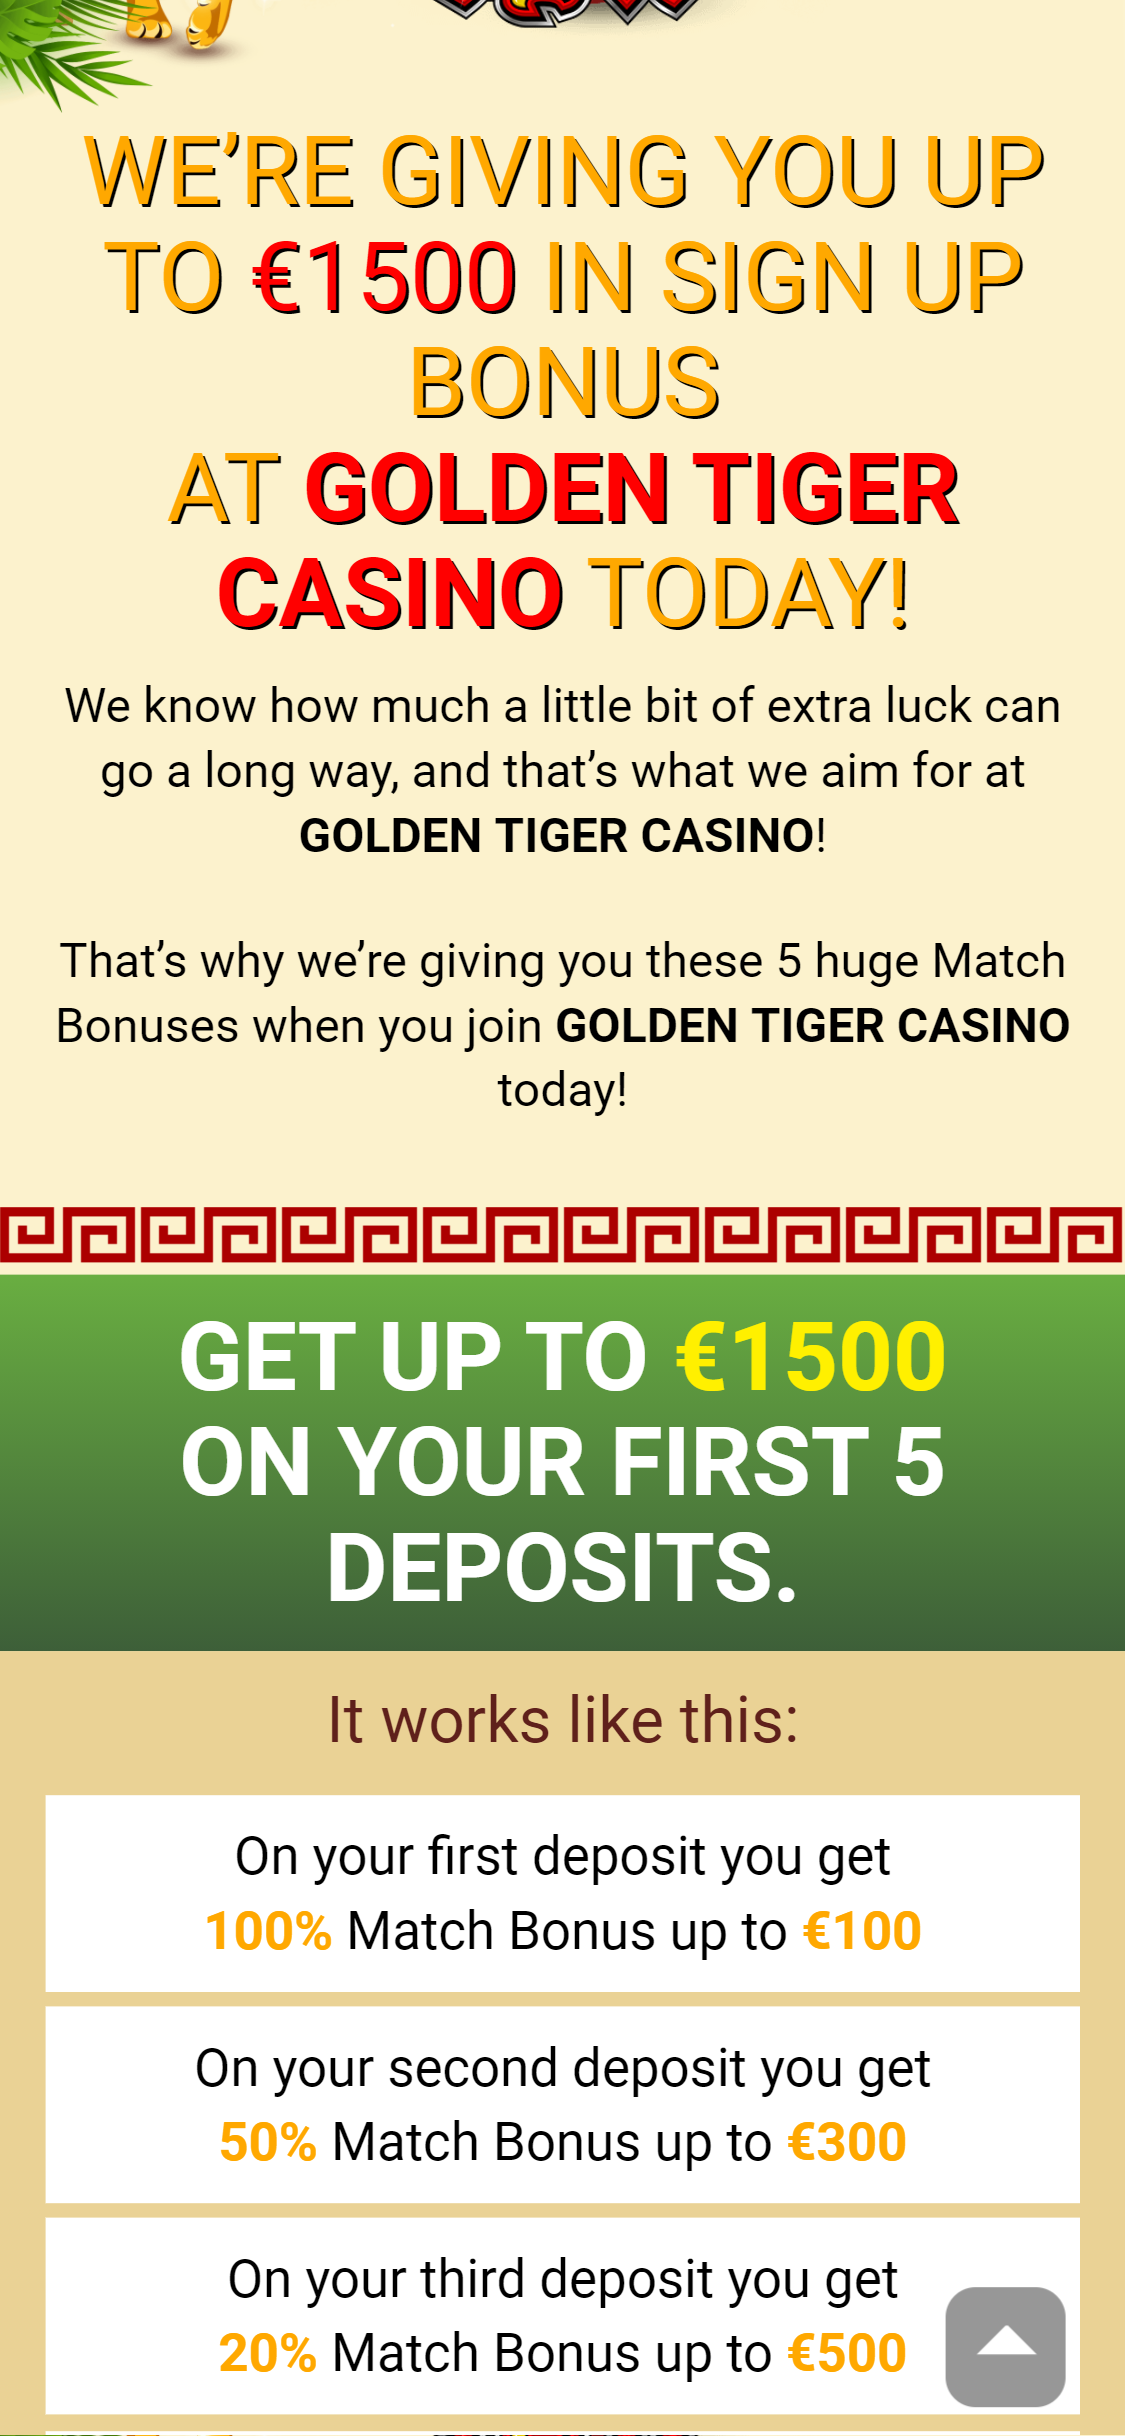 Golden Tiger Casino Mobile No Deposit Bonus Review